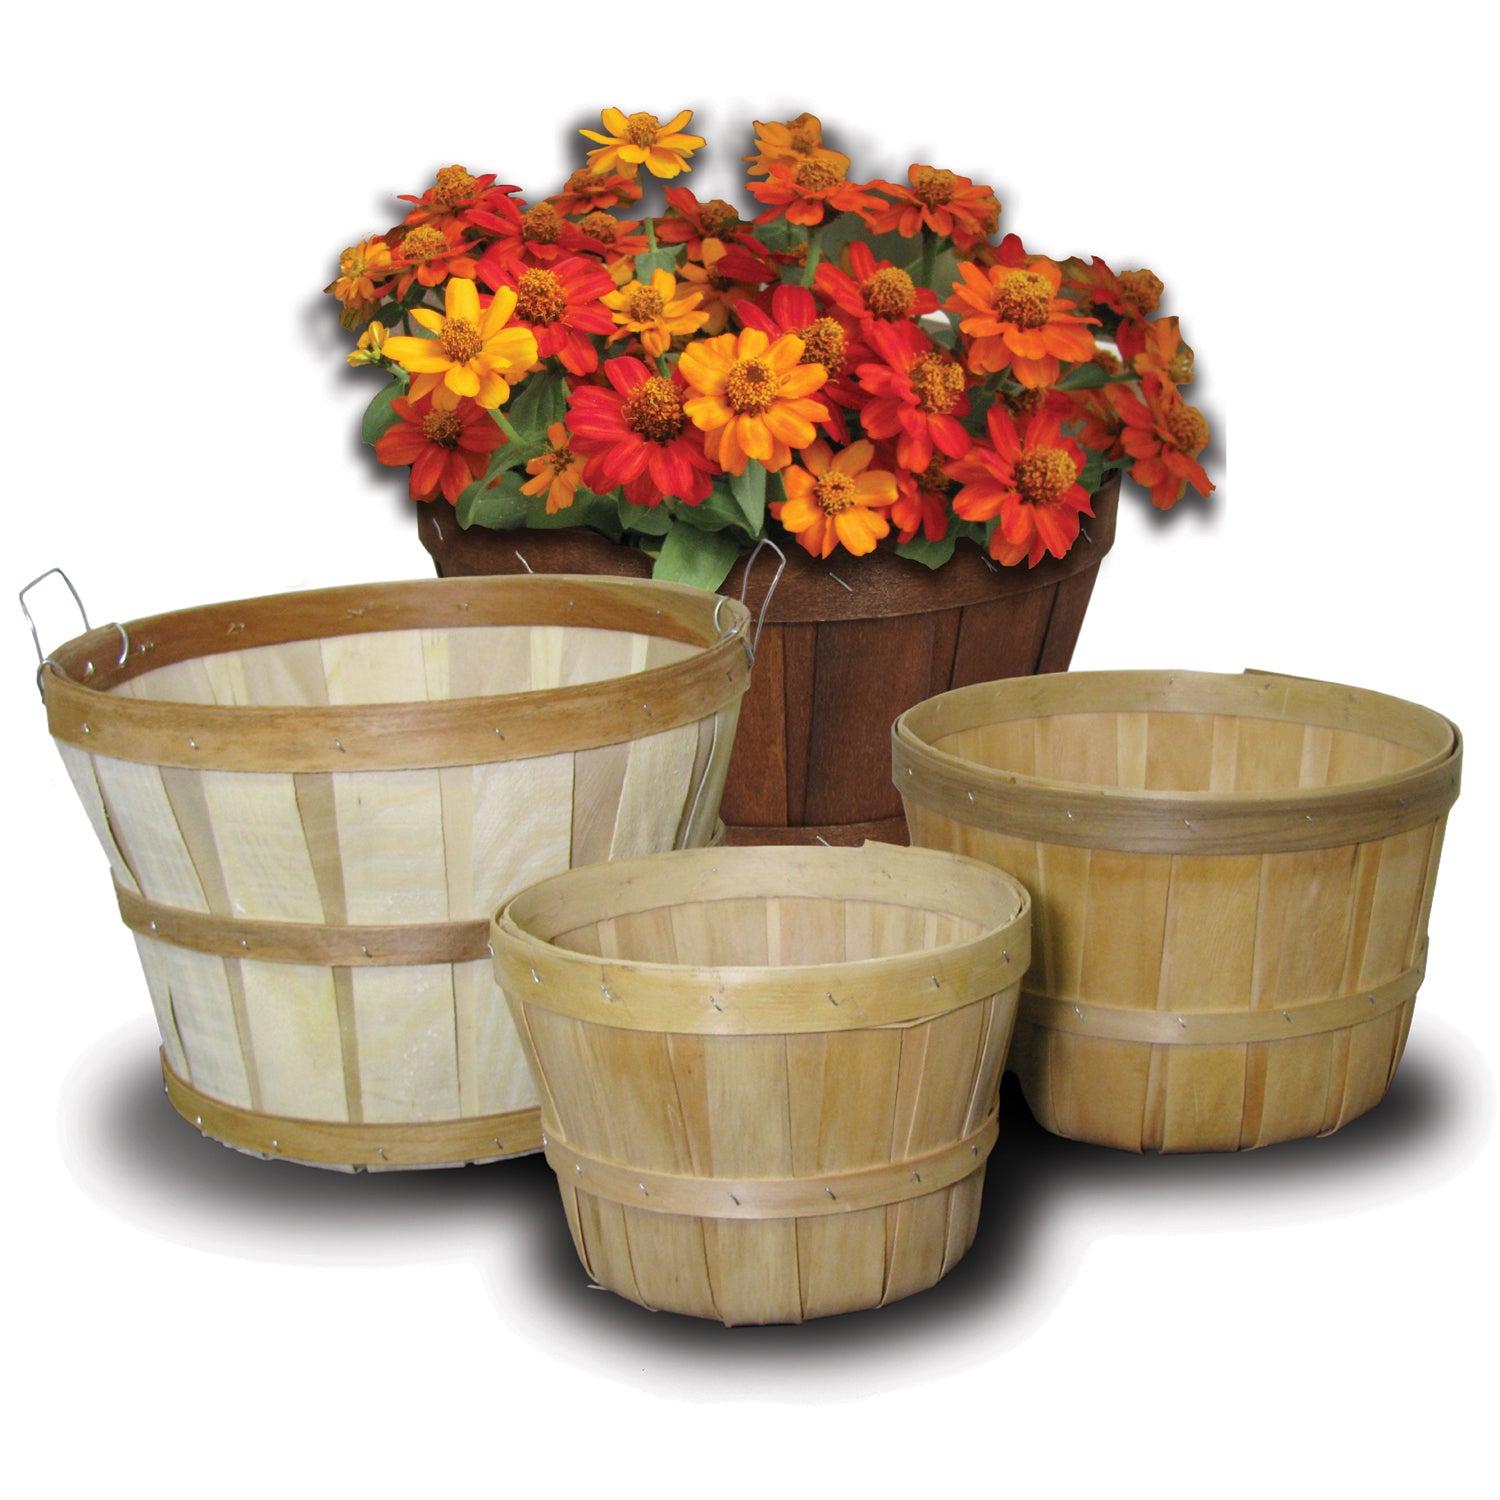 Wood Basket 1/2 Bushel, Harvest Helpers: J.W. Jung Seed Company